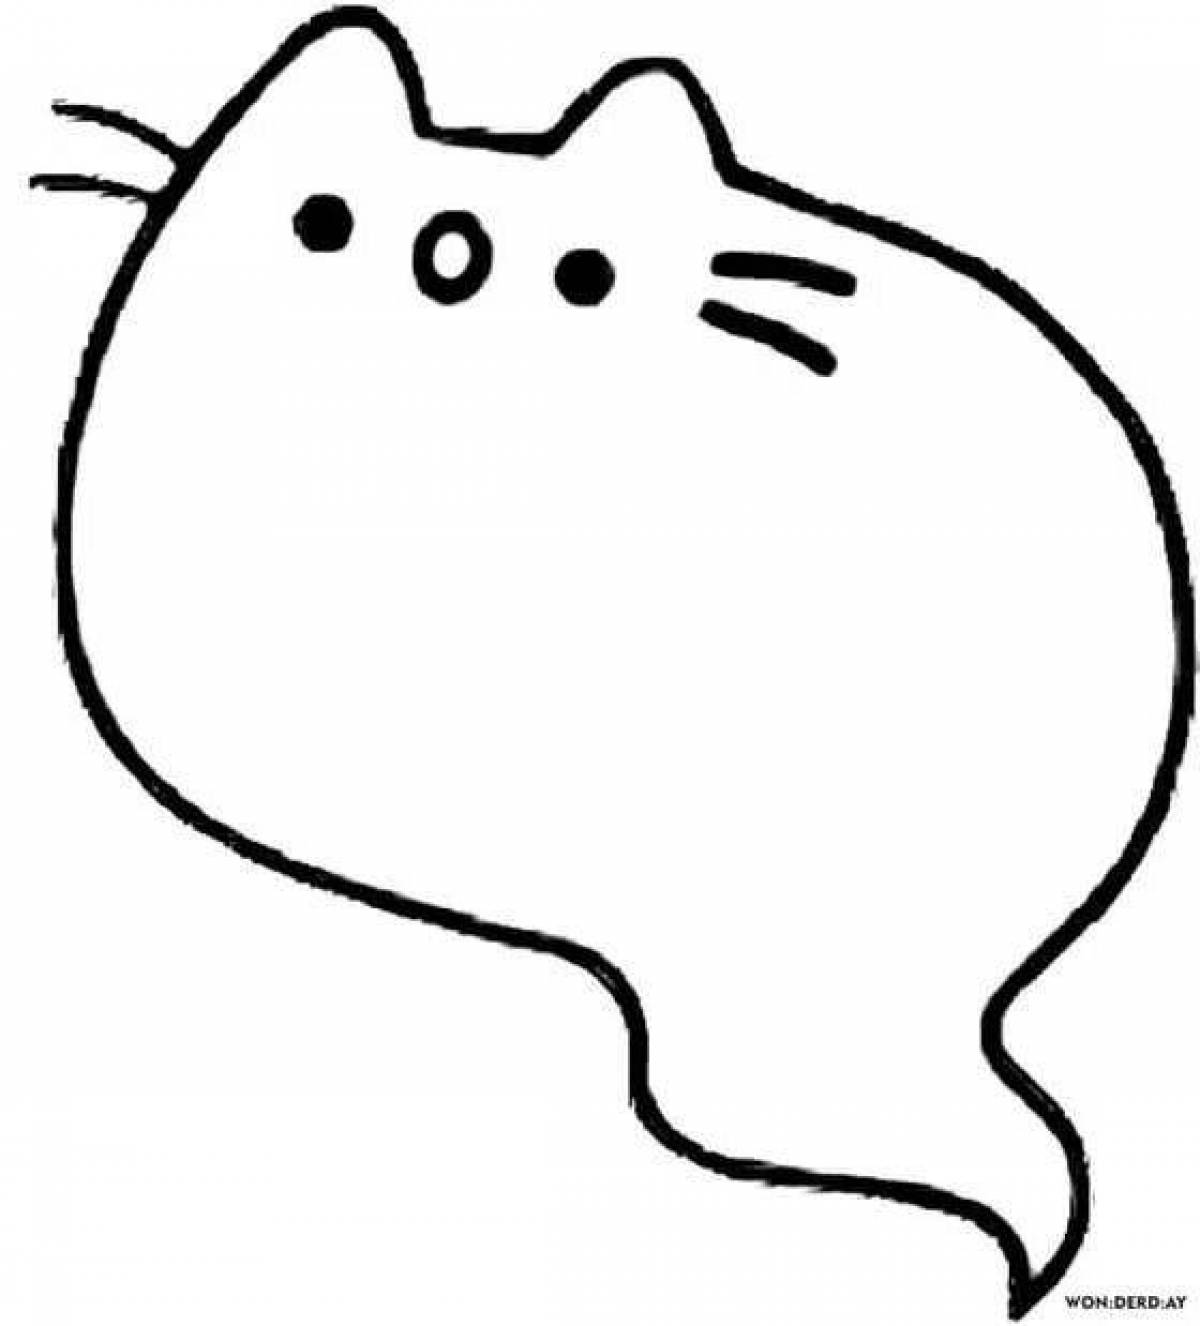 Colouring round fat cat